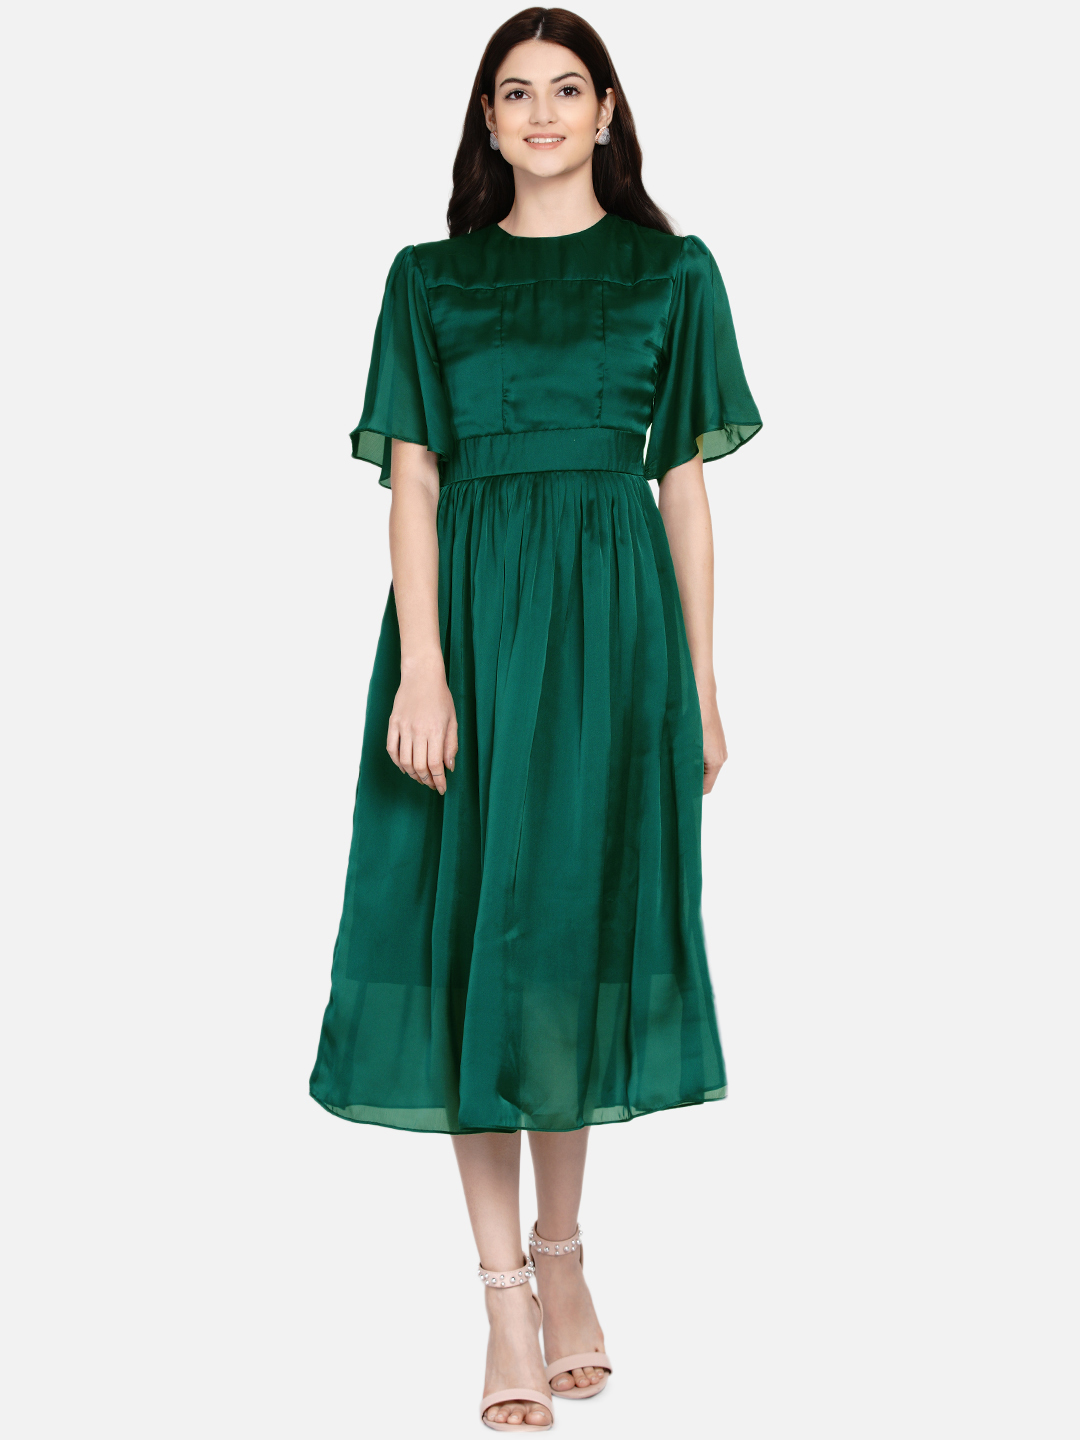 Majestic Emerald dress - Front